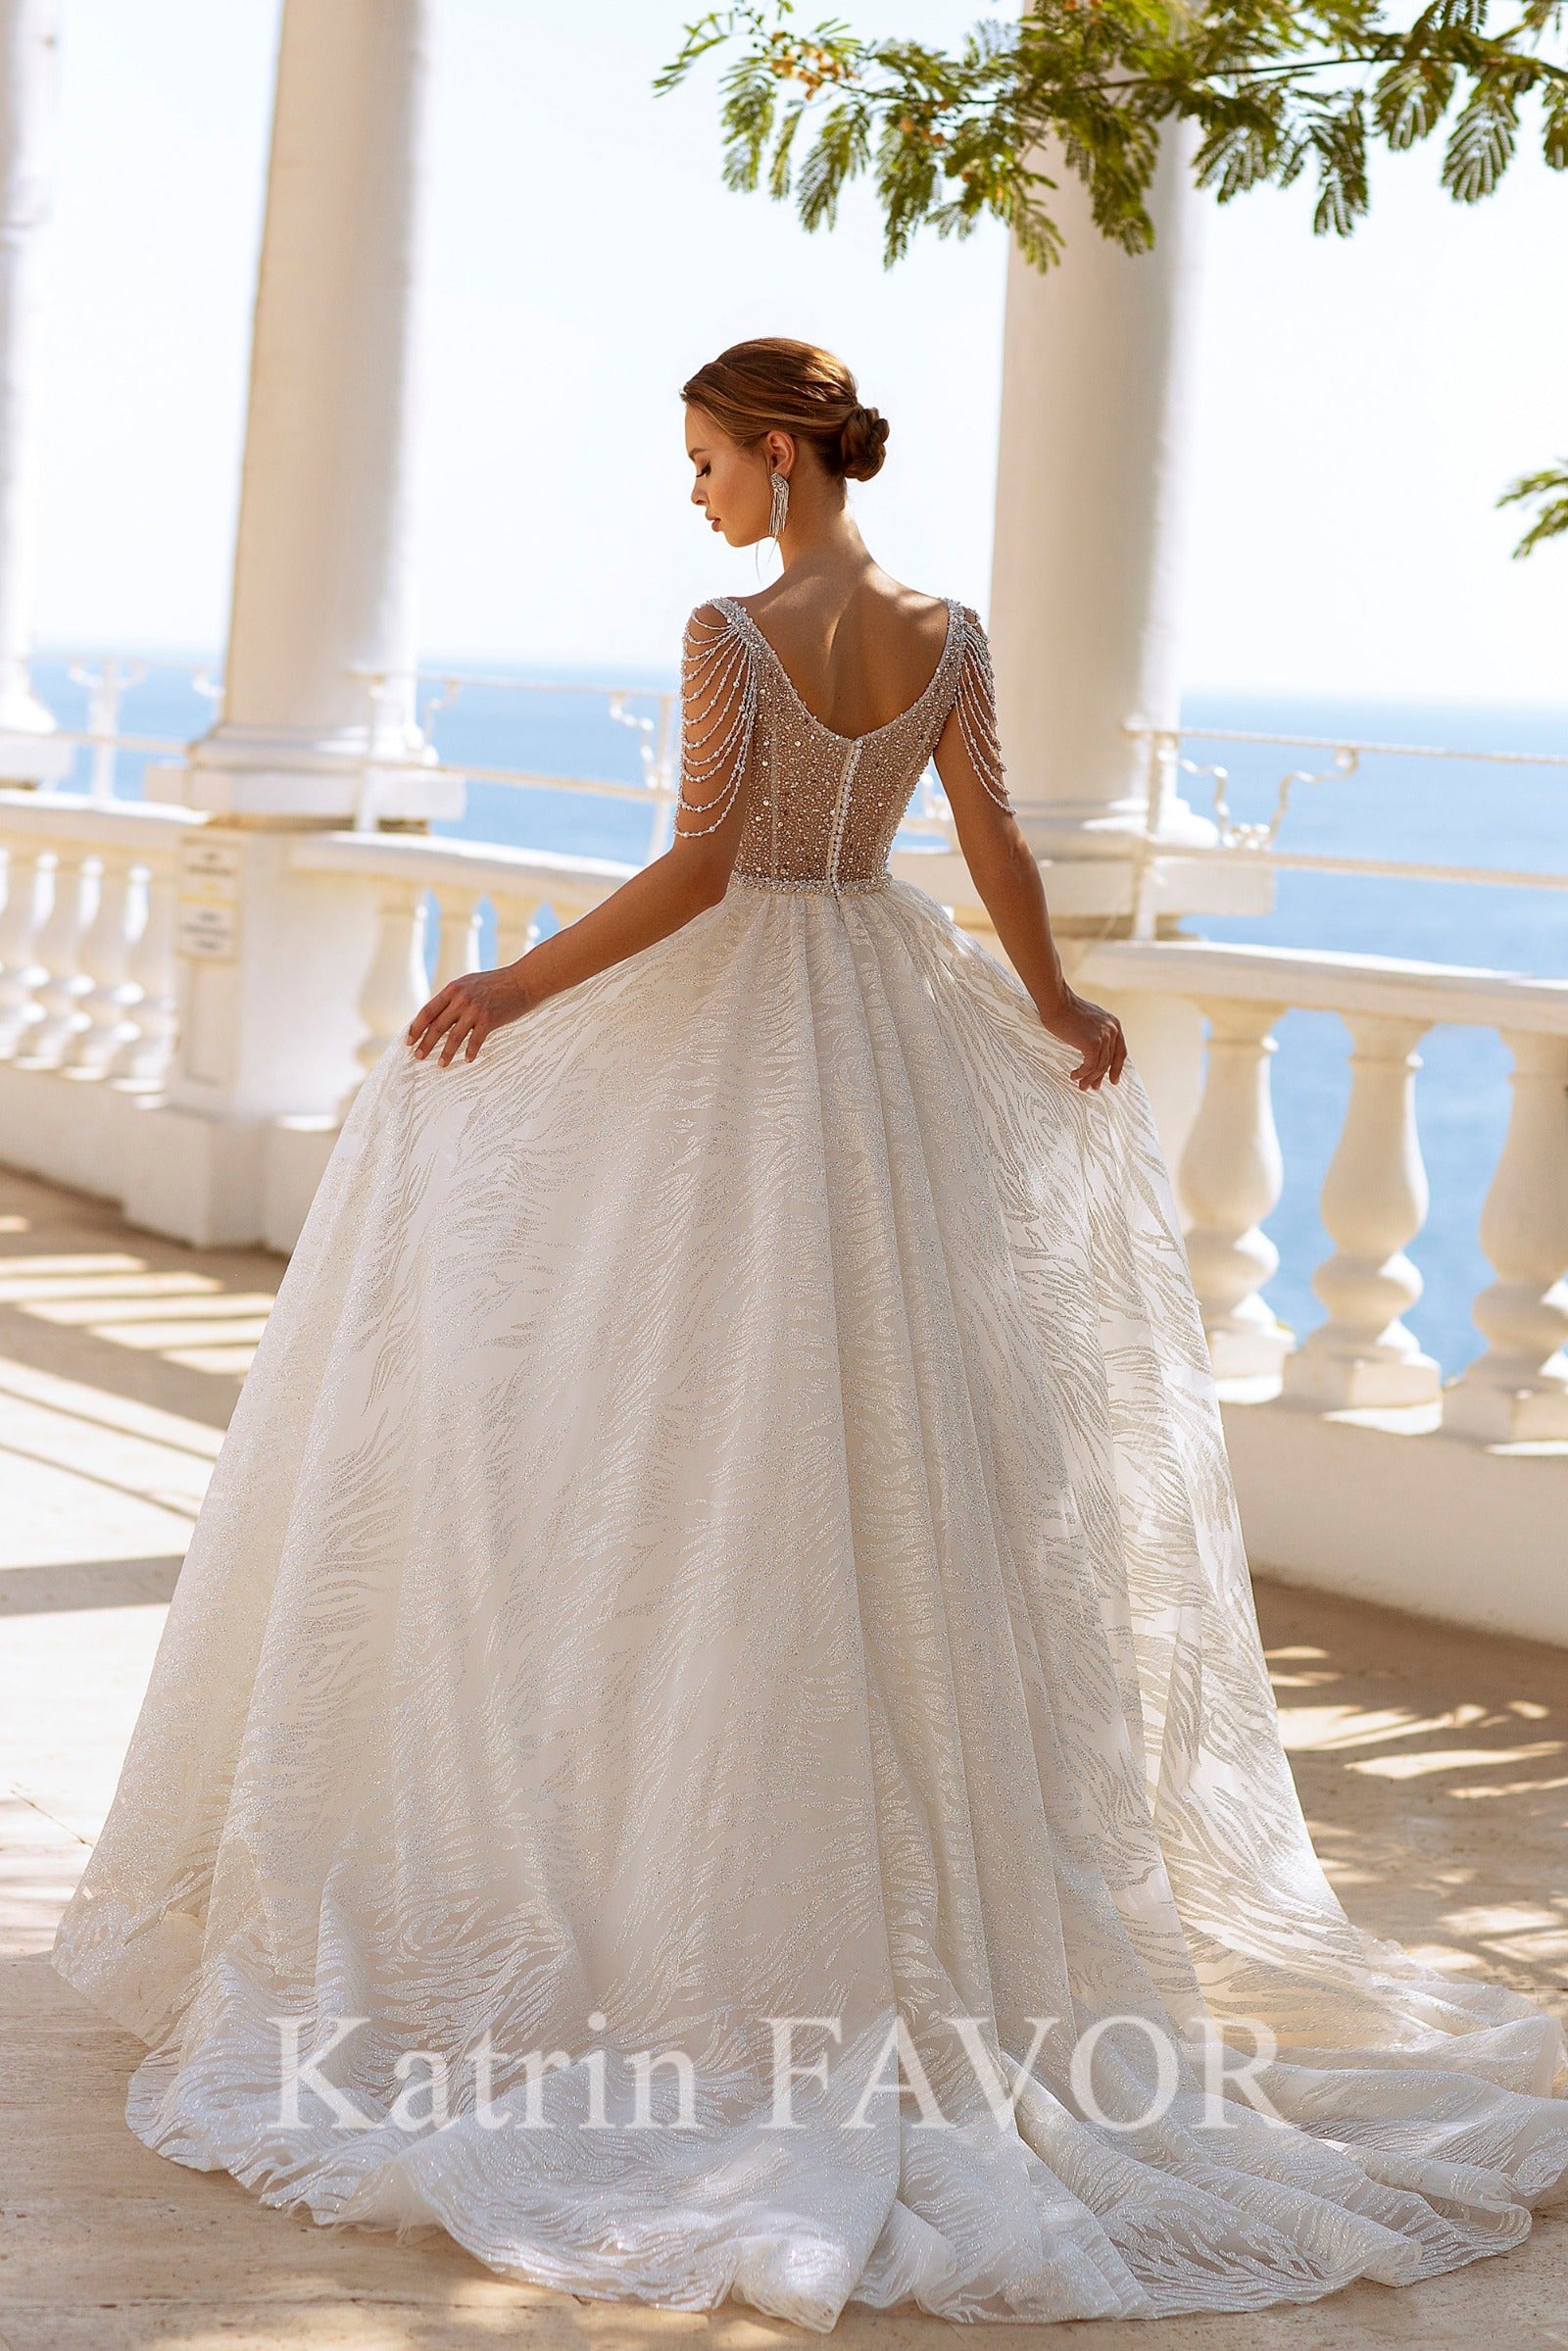 KatrinFAVORboutique-Beaded ballgown princess wedding dress